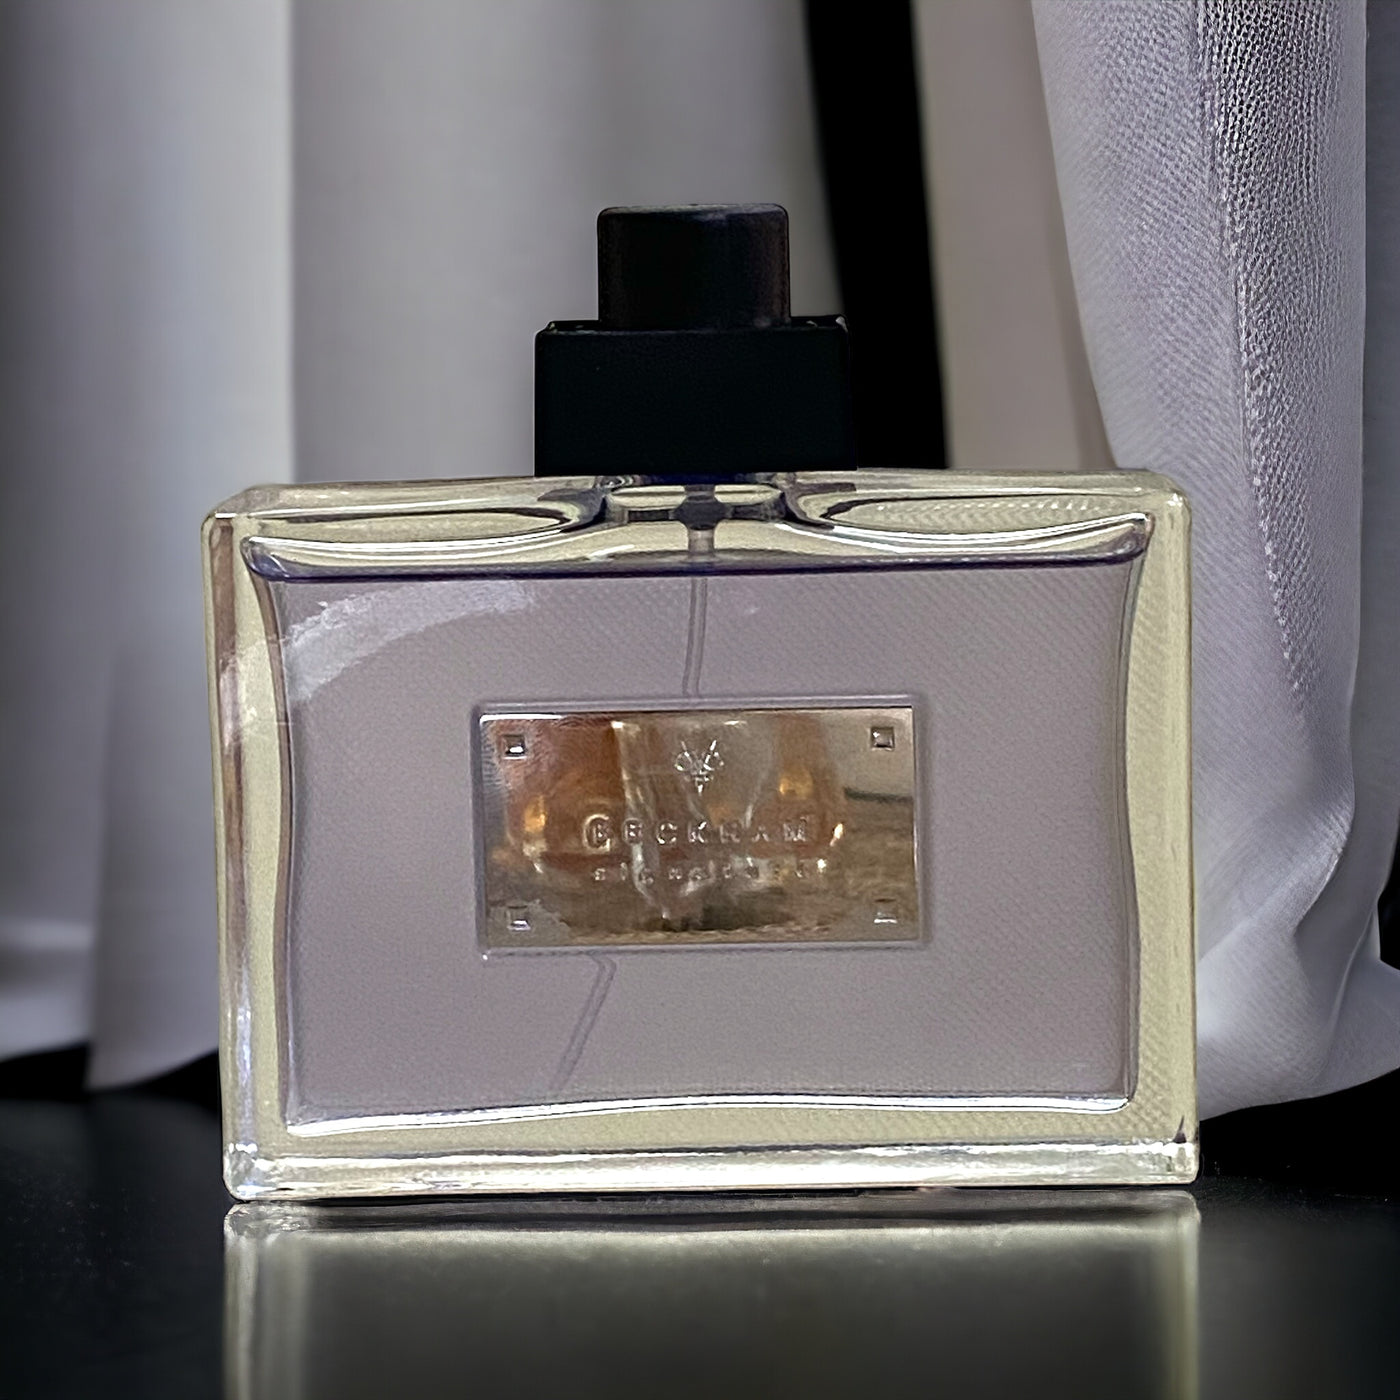 BECKHAM signature Tester Perfume